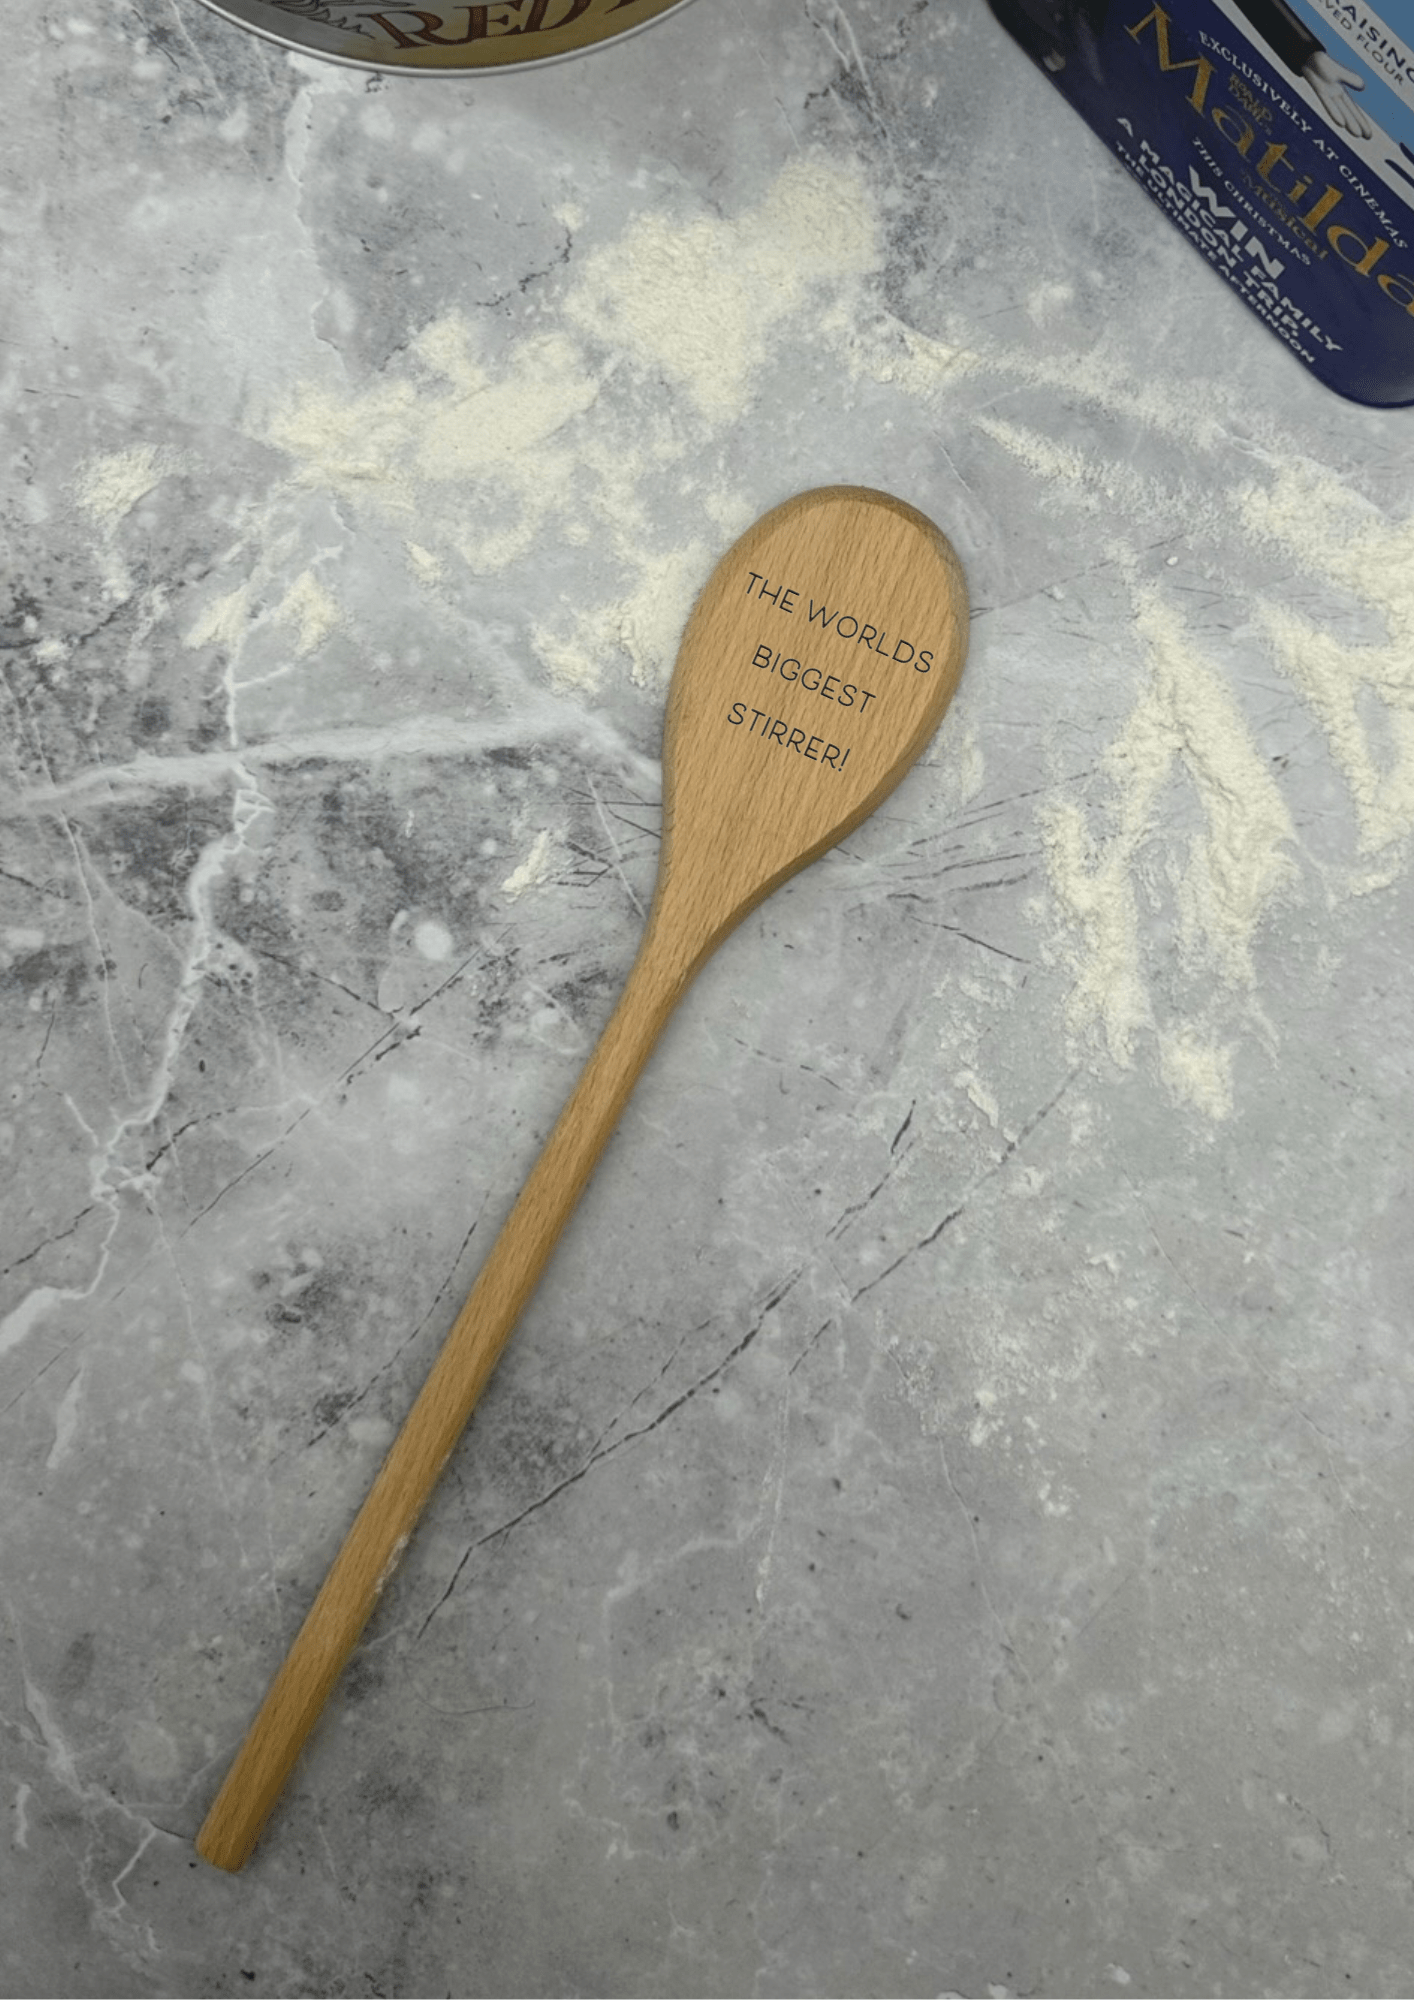 Lua Nova Wooden Spoon Wooden Spoon - The Worlds Biggest Stirrer